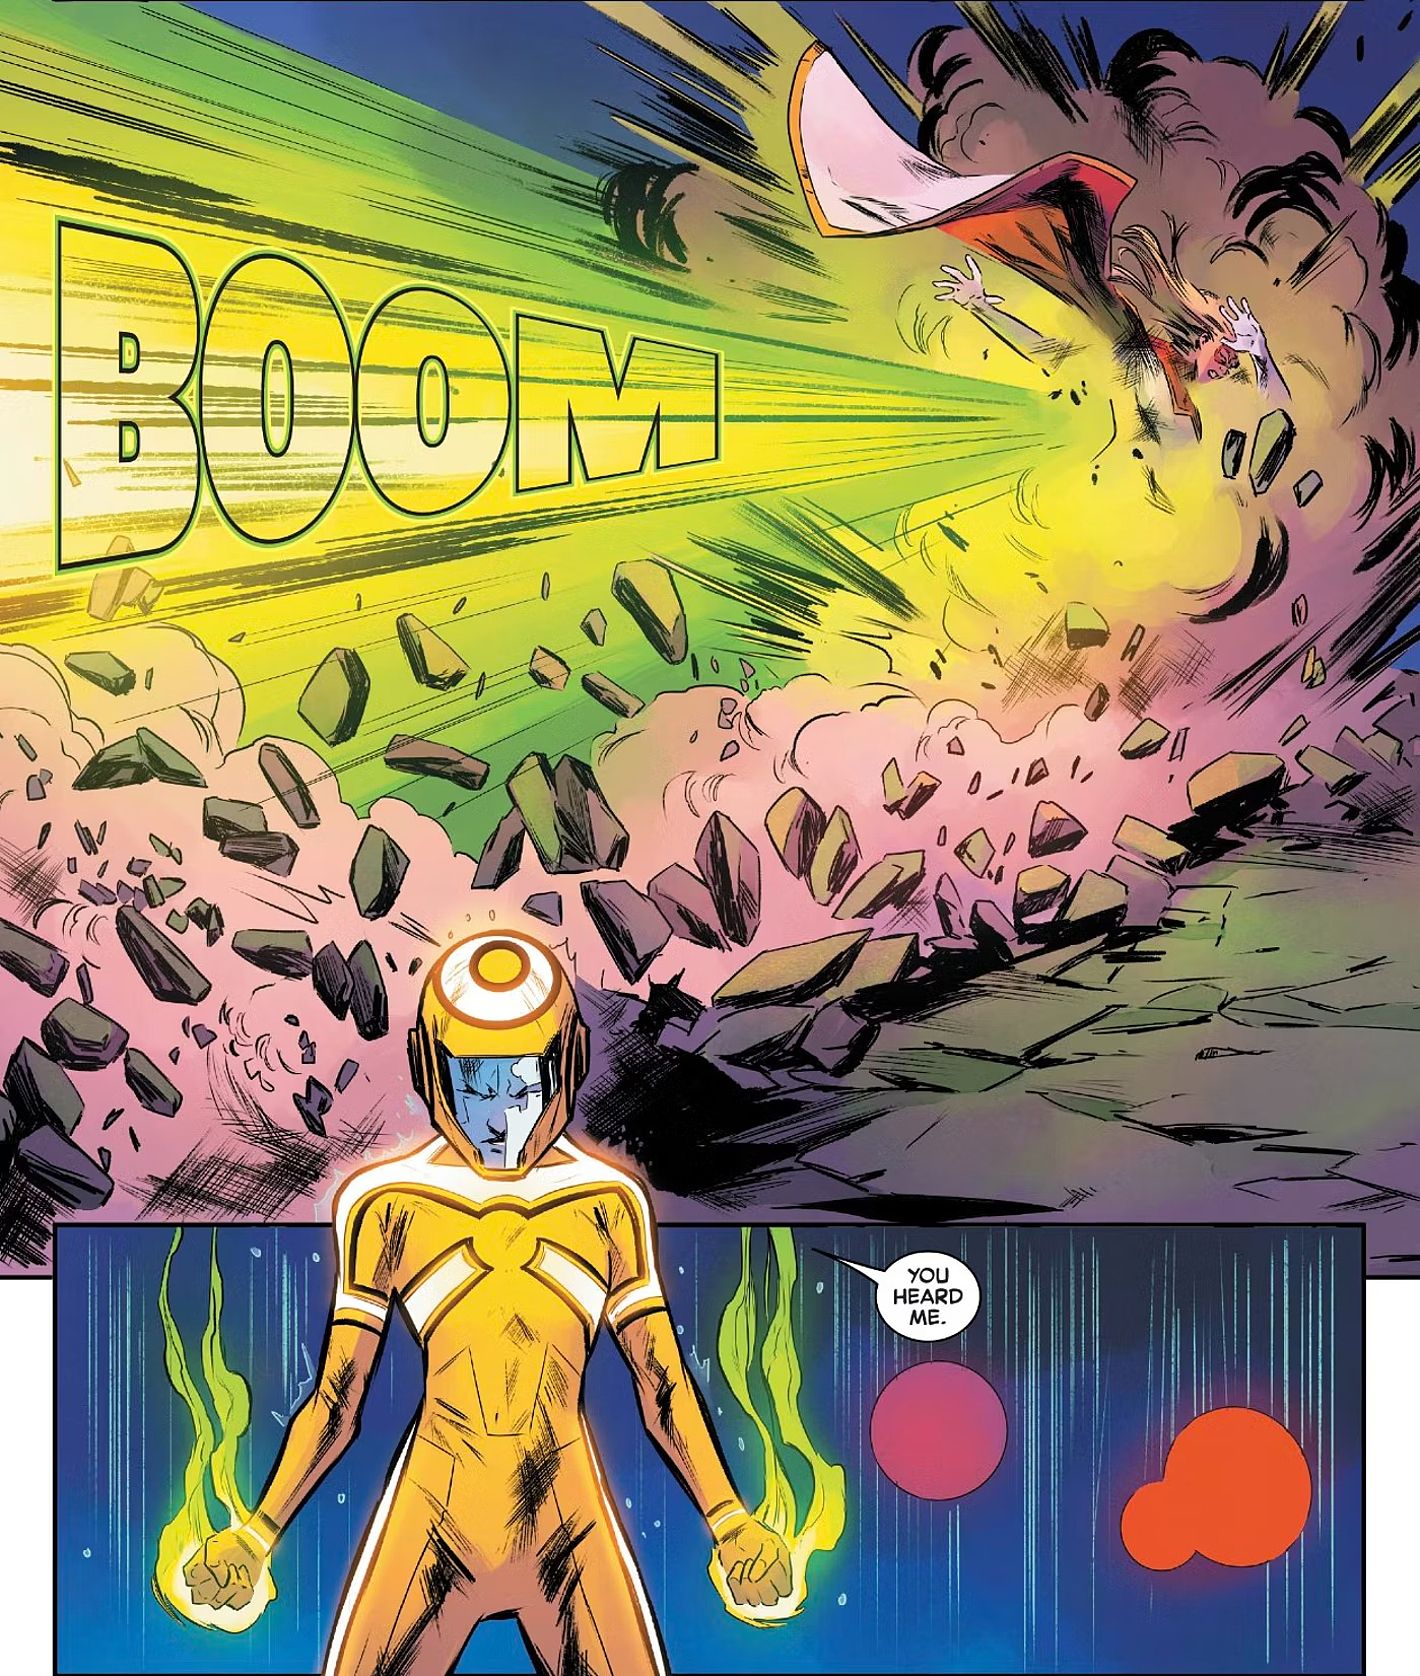 Avengers member Hazmat uses her toxic chemical blast abilities